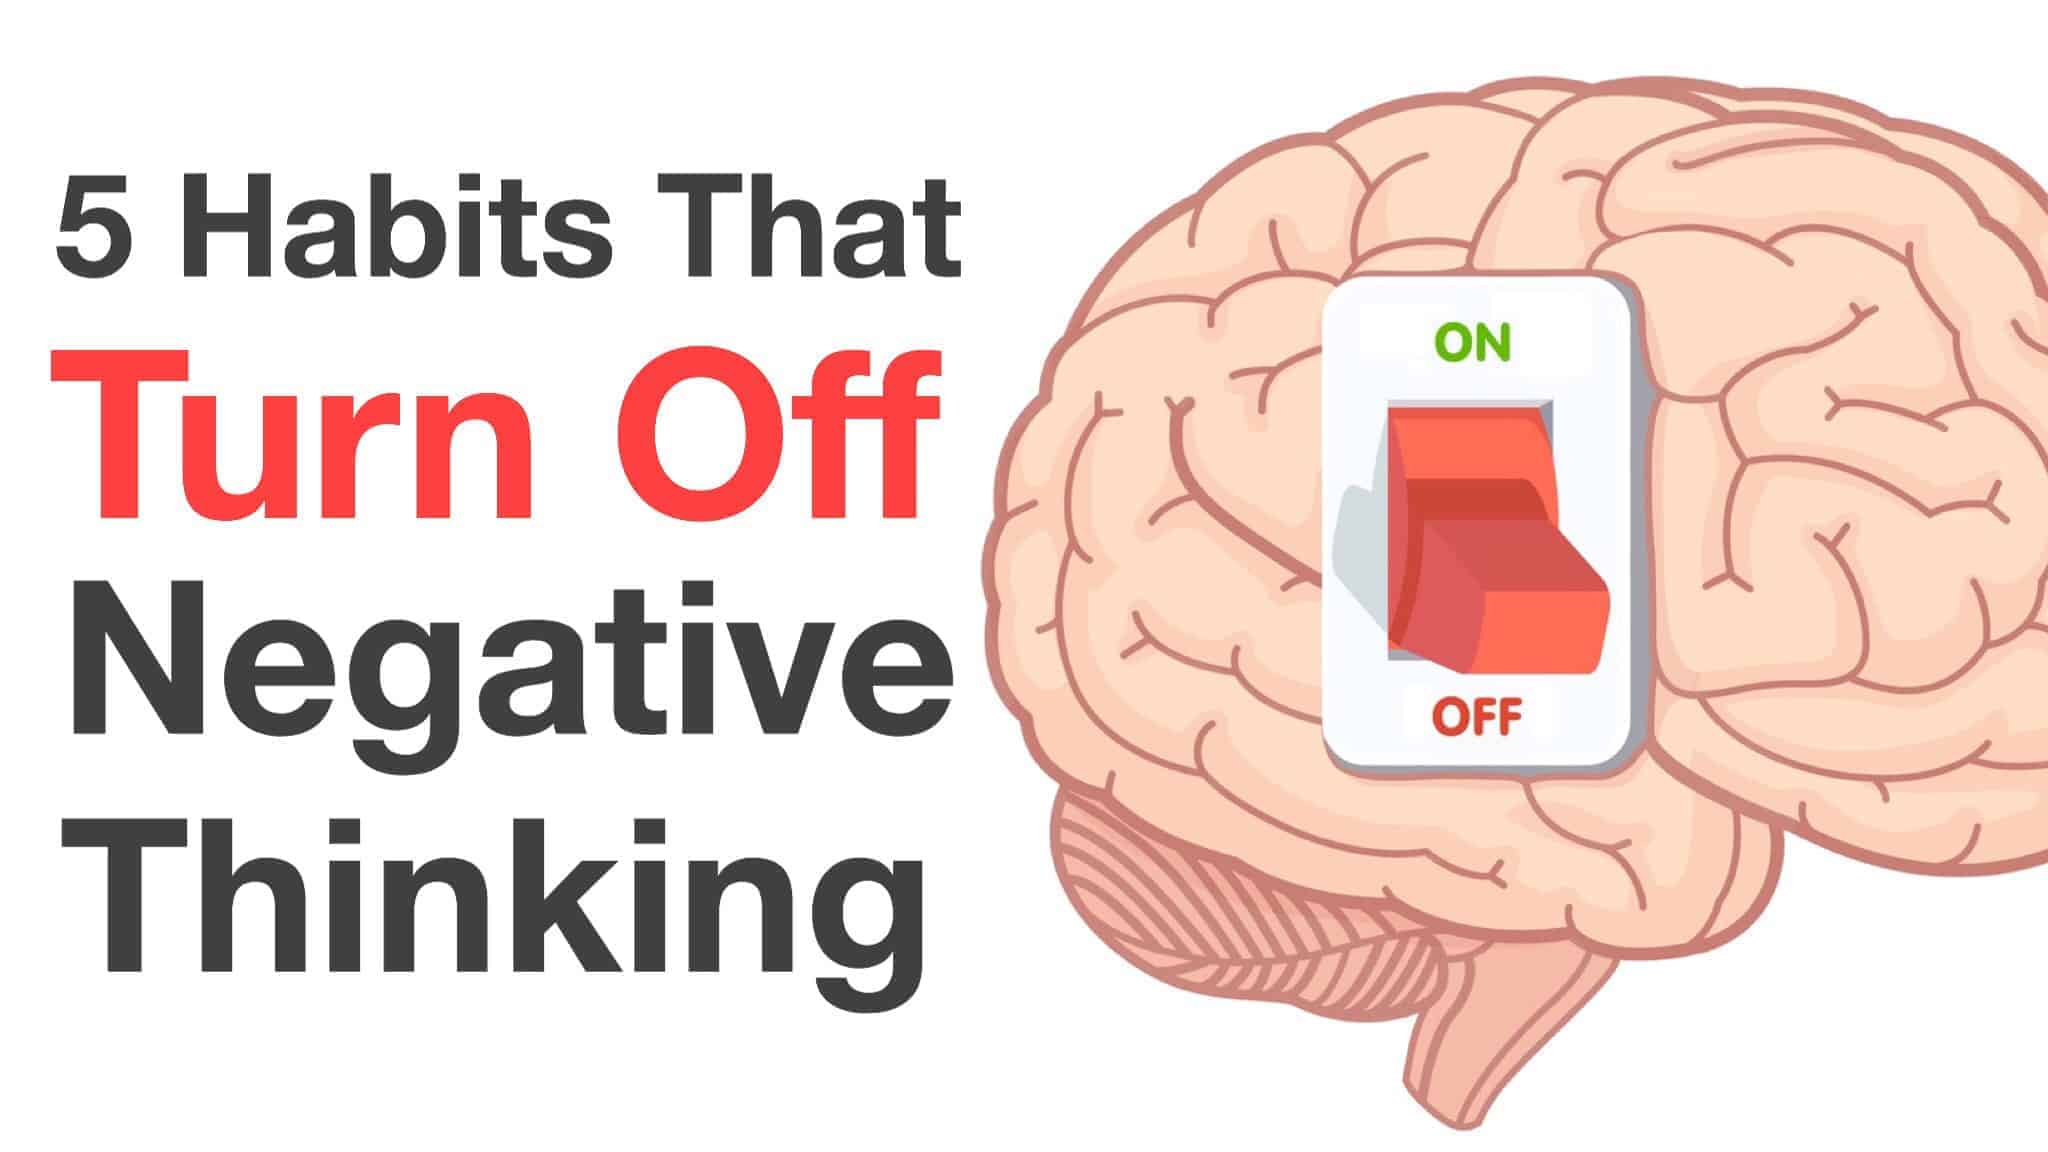 5 Habits That Turn Off Negative Thinking